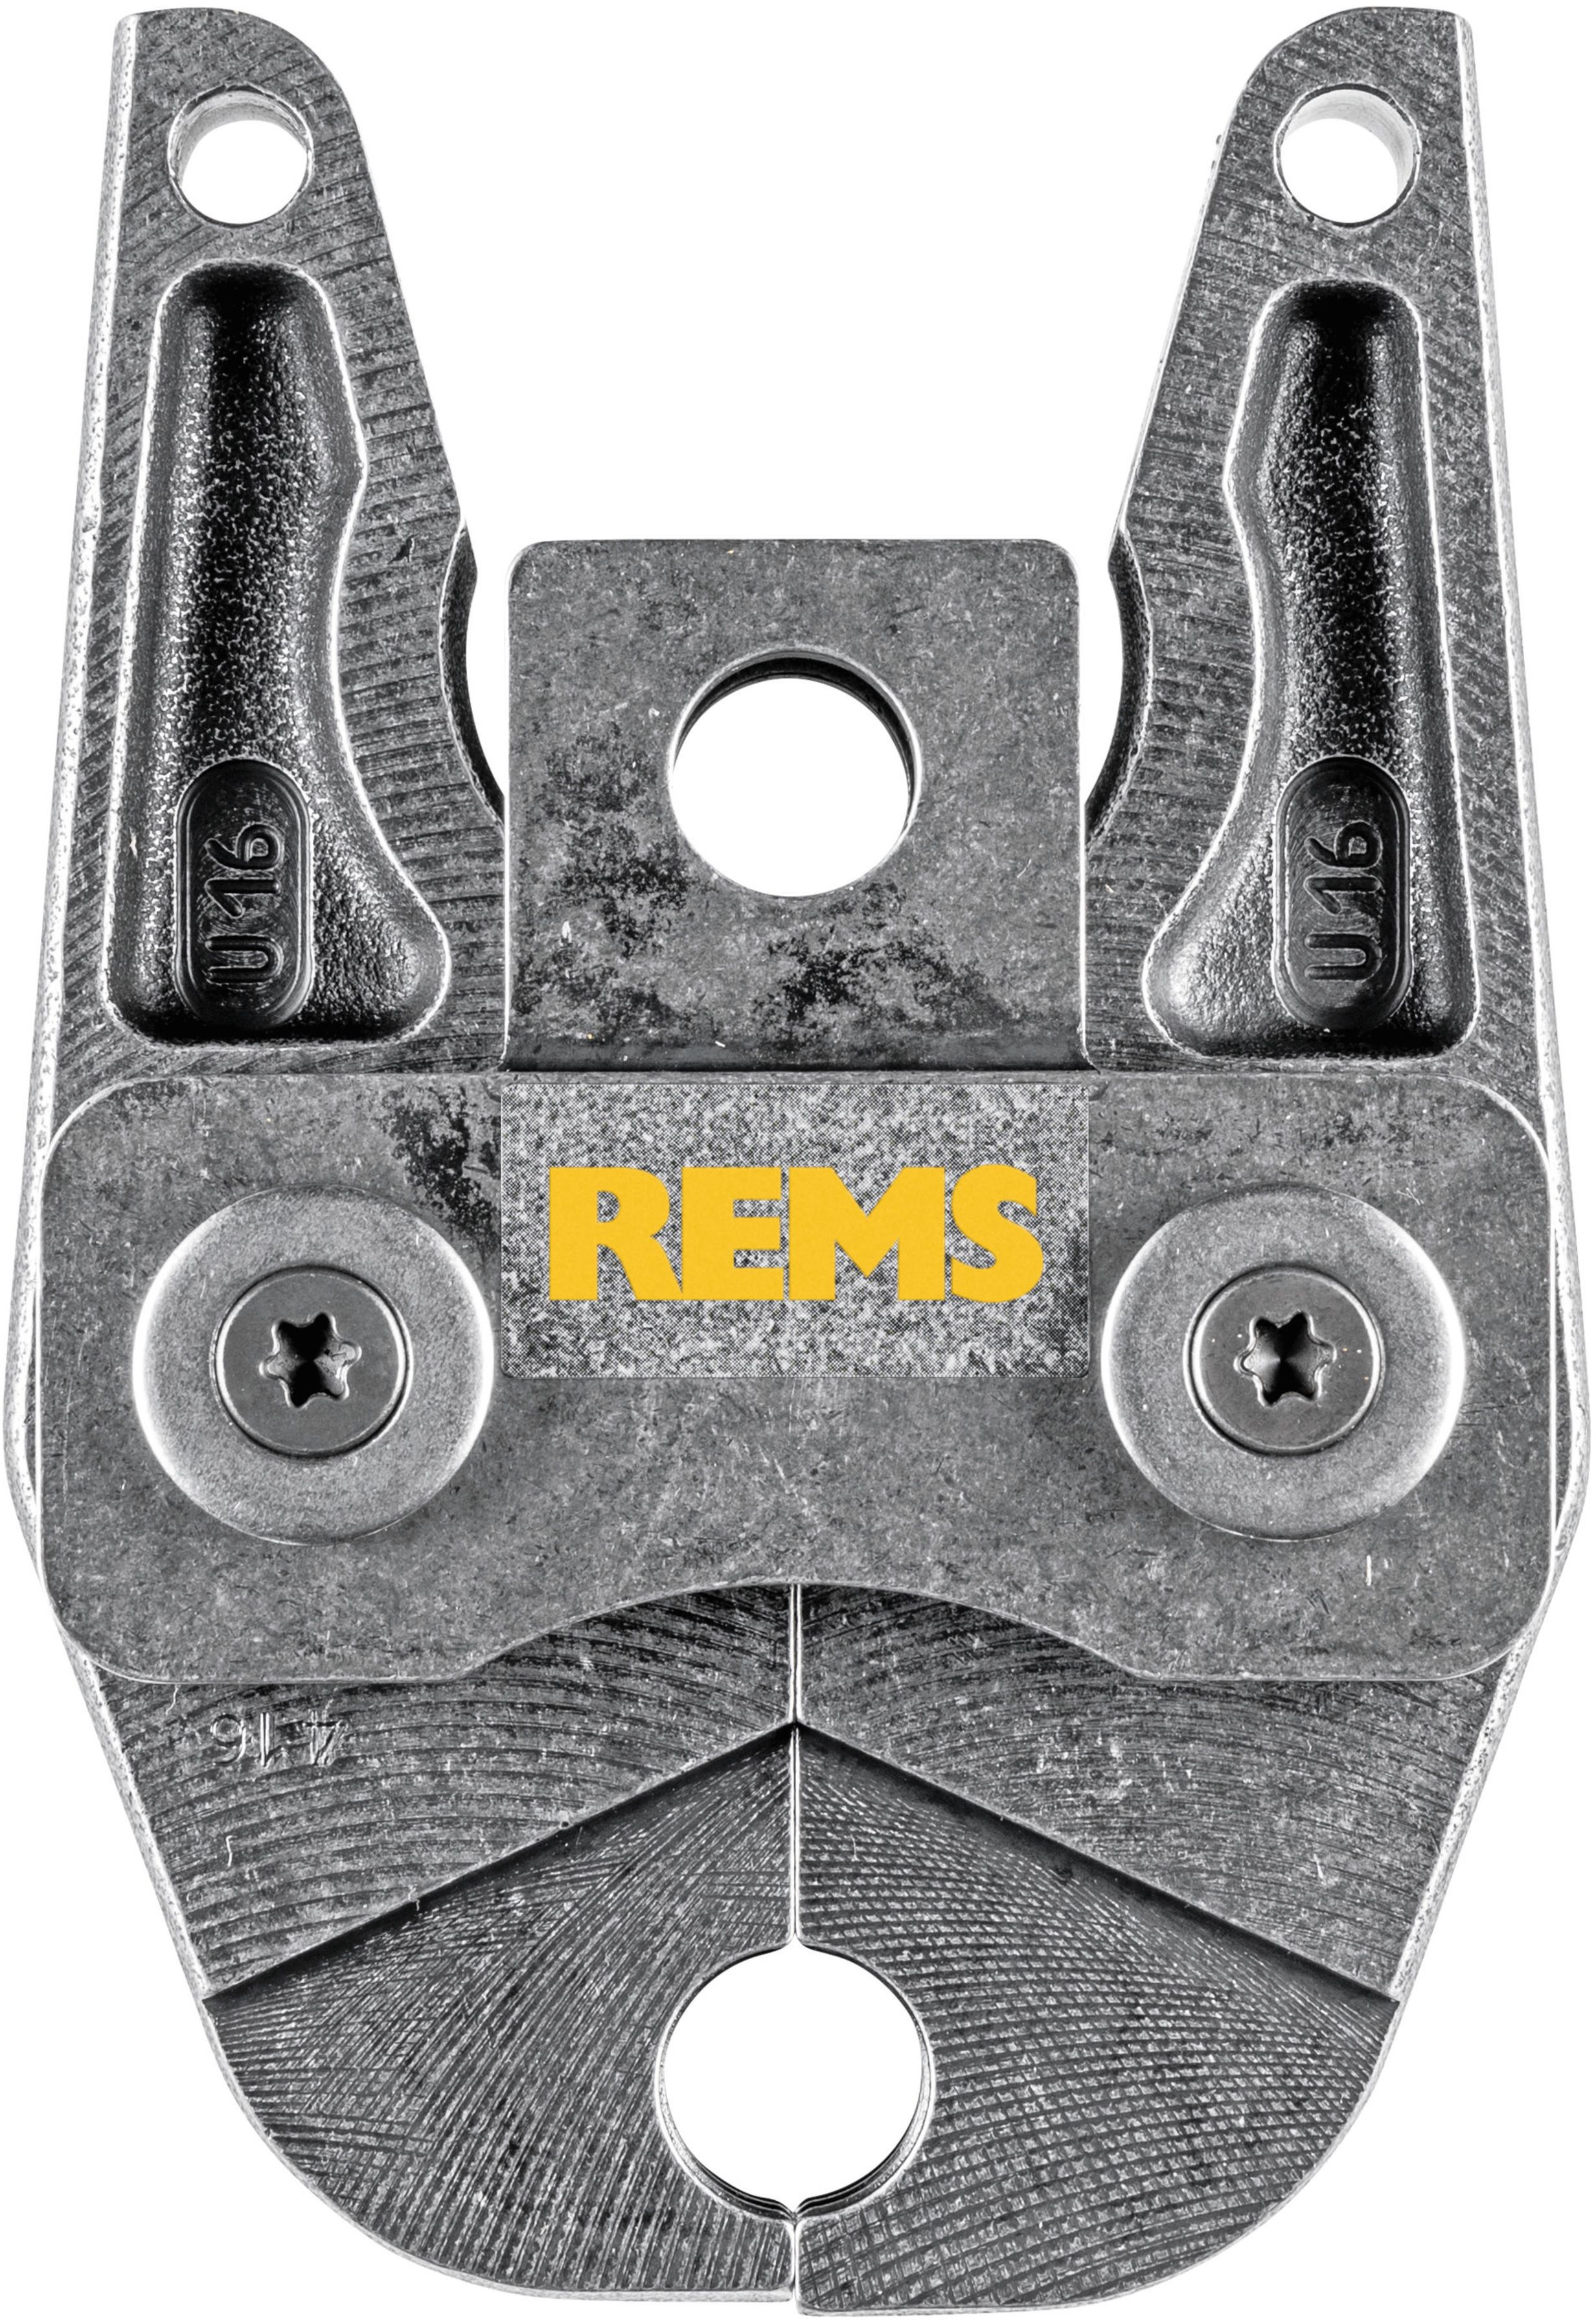 REMS Presszange 570765, U16 - Sanitärwerkzeuge